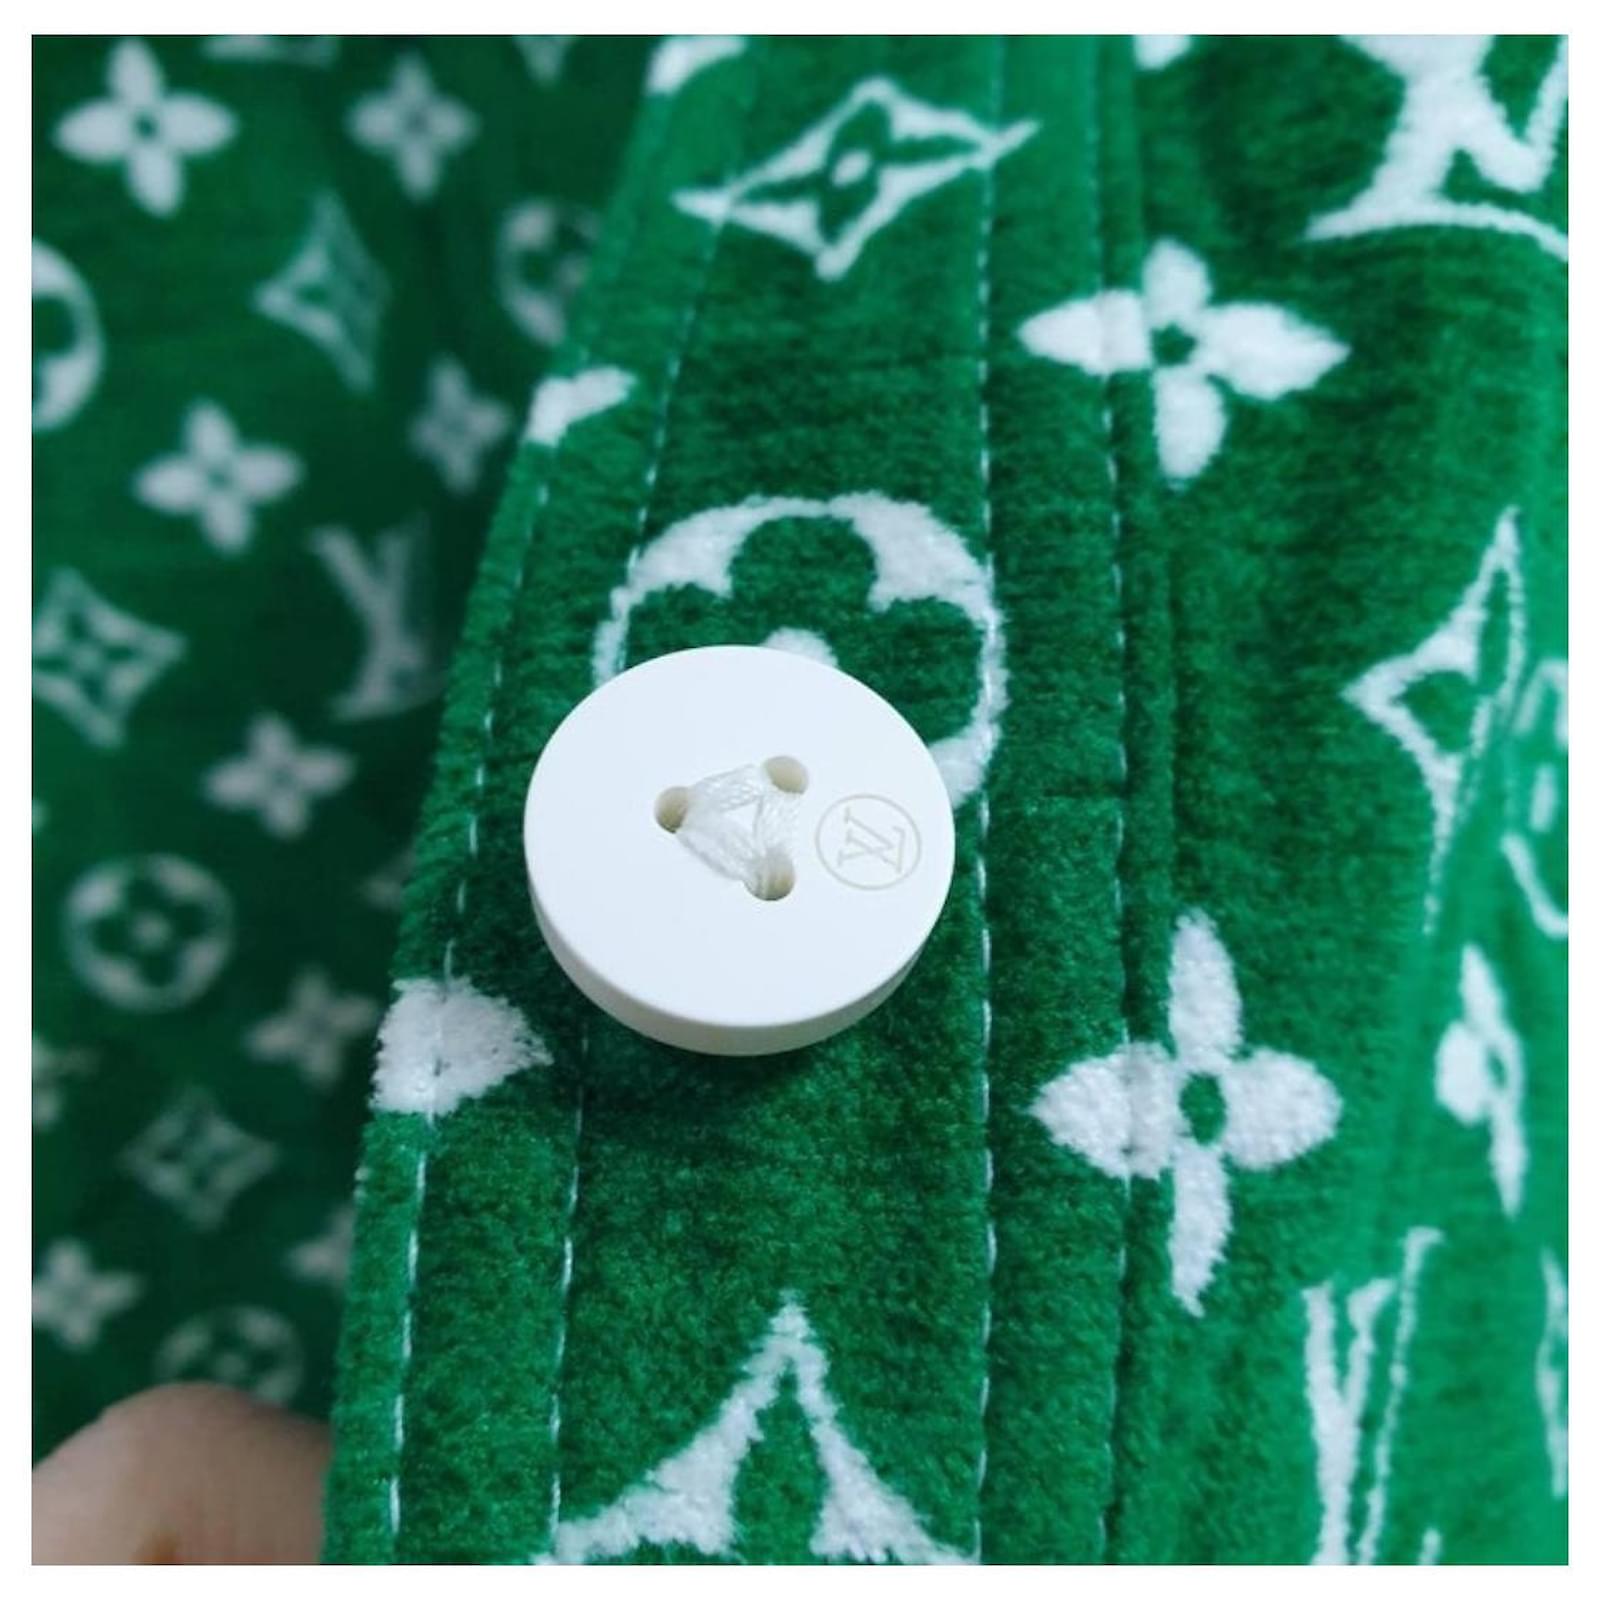 Louis Vuitton Padded Nylon Bomber Jacket Green Khaki For Women - Clothingta